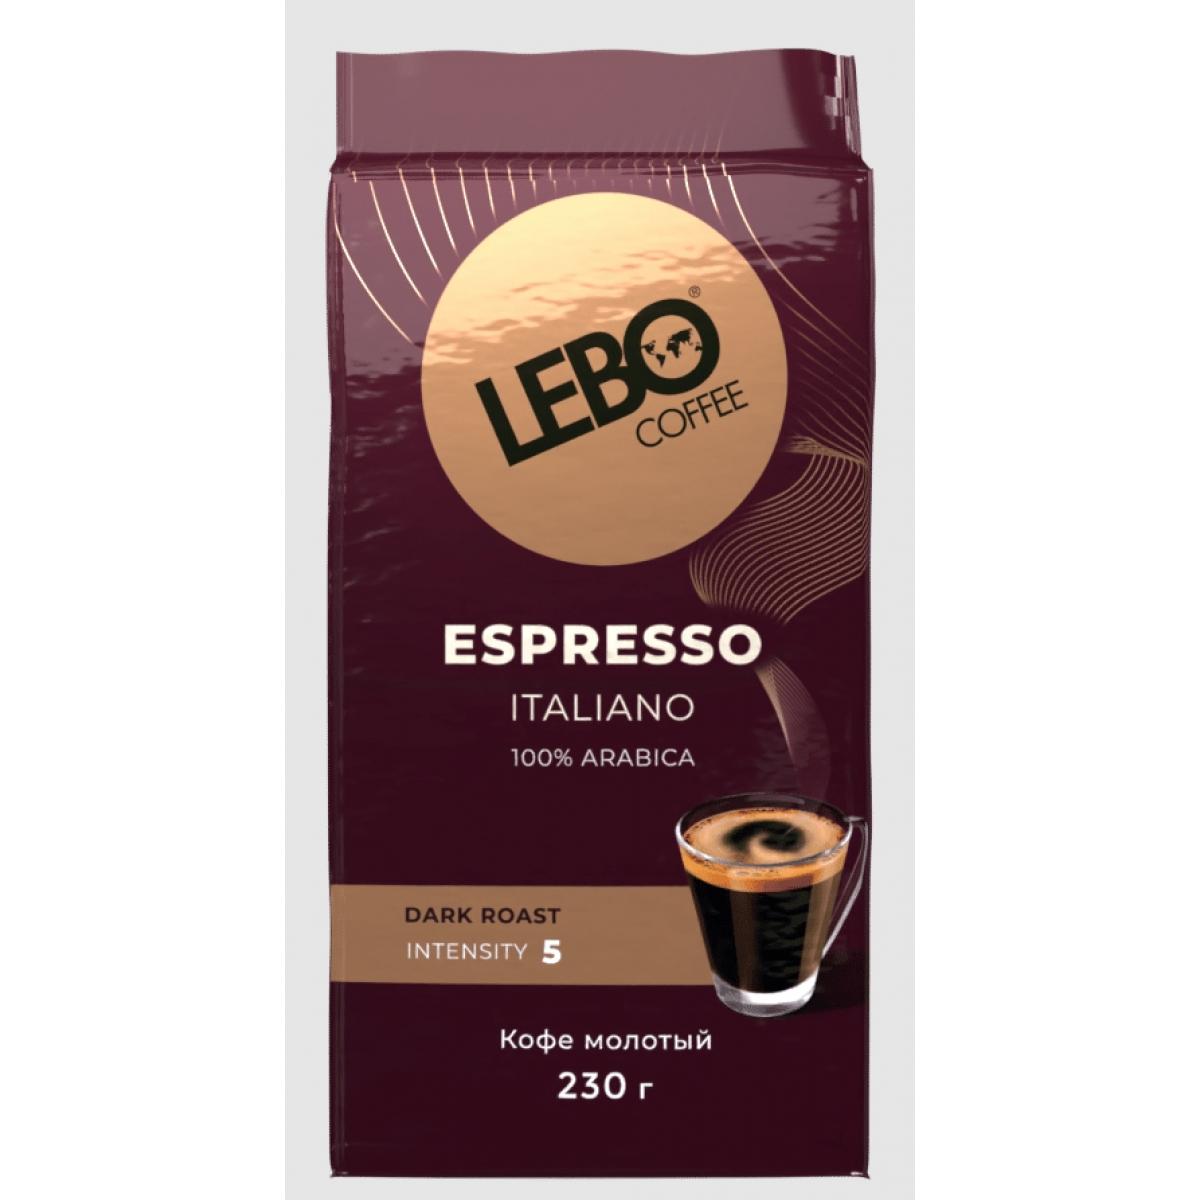 Кофе LEBO ESPRESSO italiano  230 гр